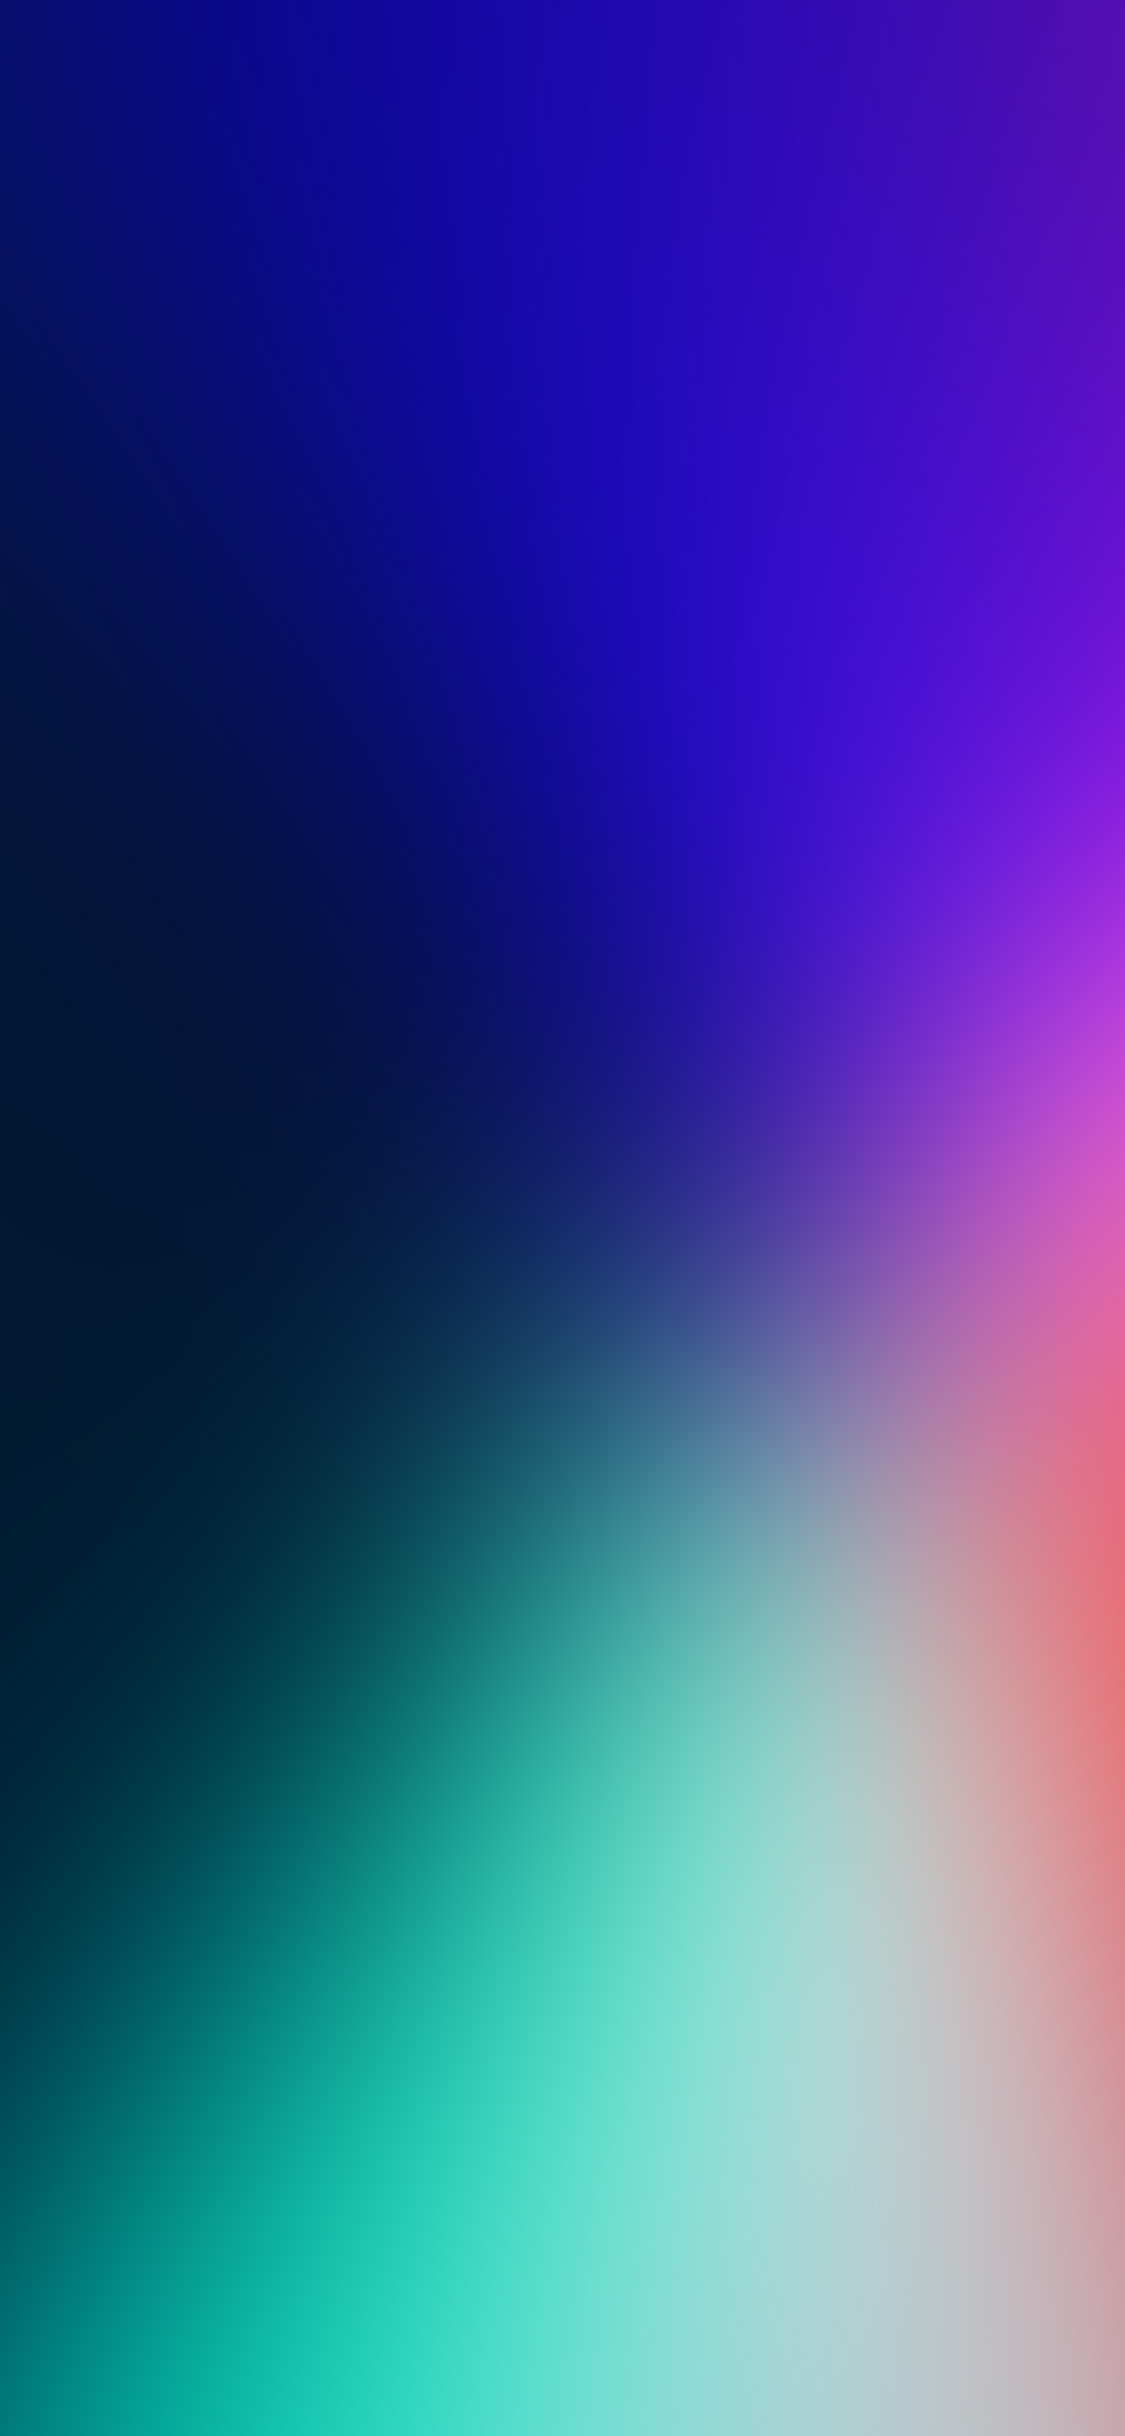 1125x2436 | iPhone11 wallpaper | so84-blur-gradation-apple-event- rainbow-pastel